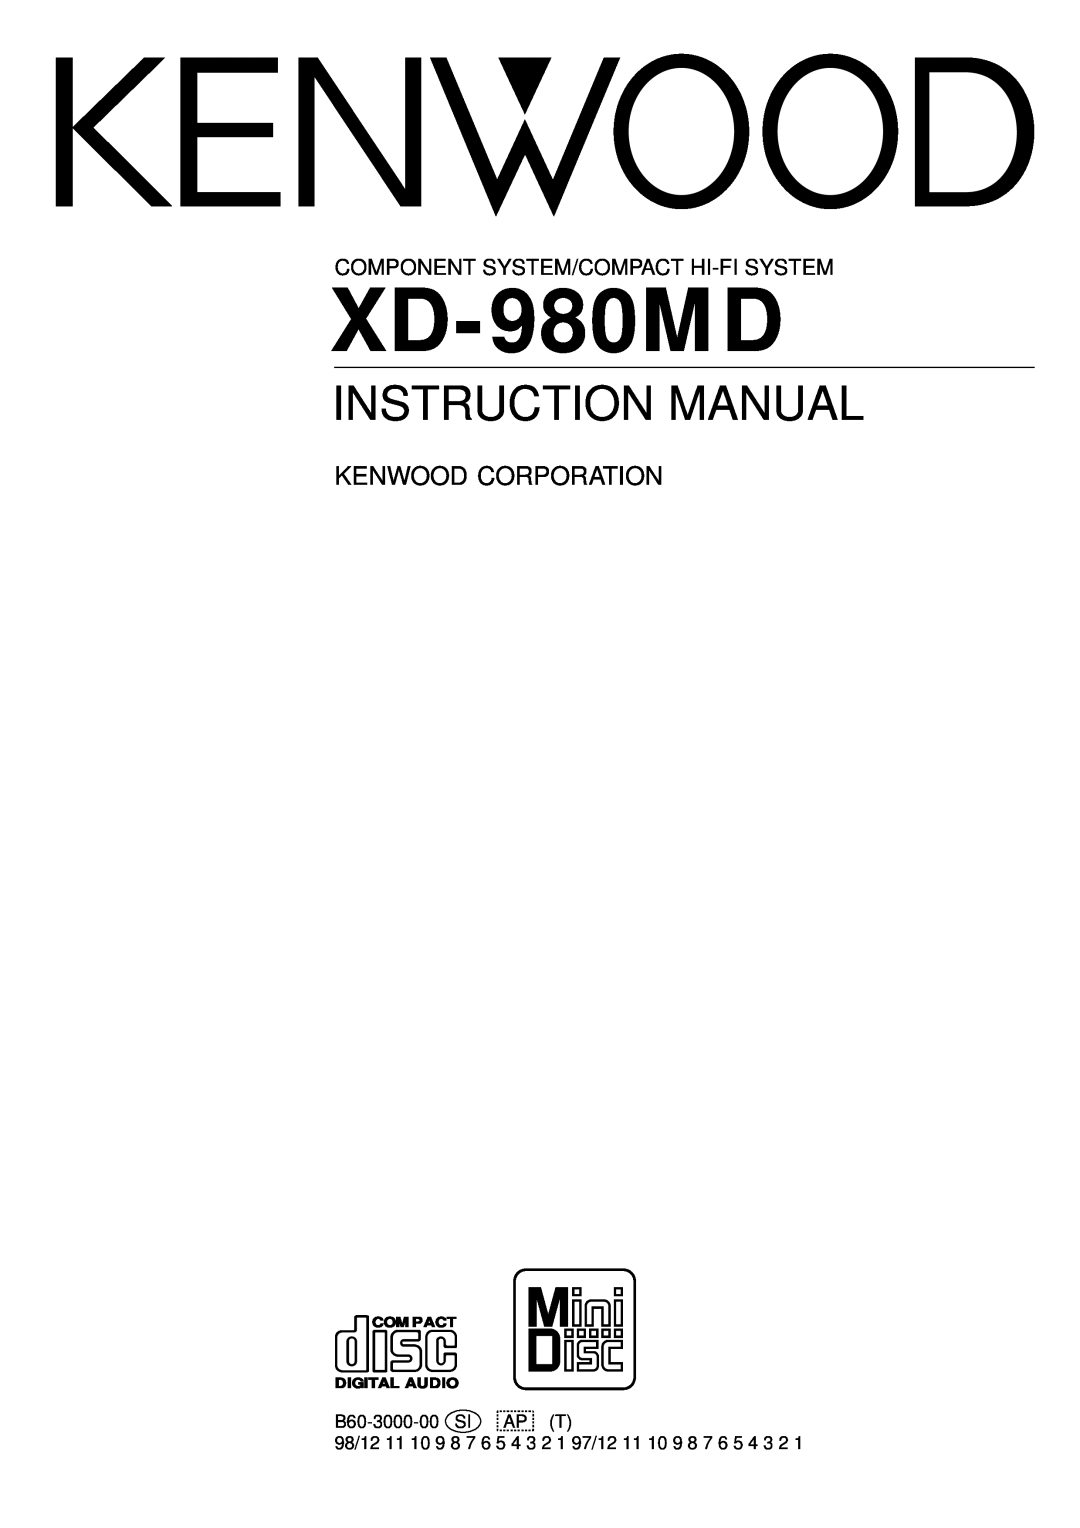 Kenwood XD-980MD instruction manual Instruction Manual, Kenwood Corporation, Component System/Compact Hi-Fisystem 